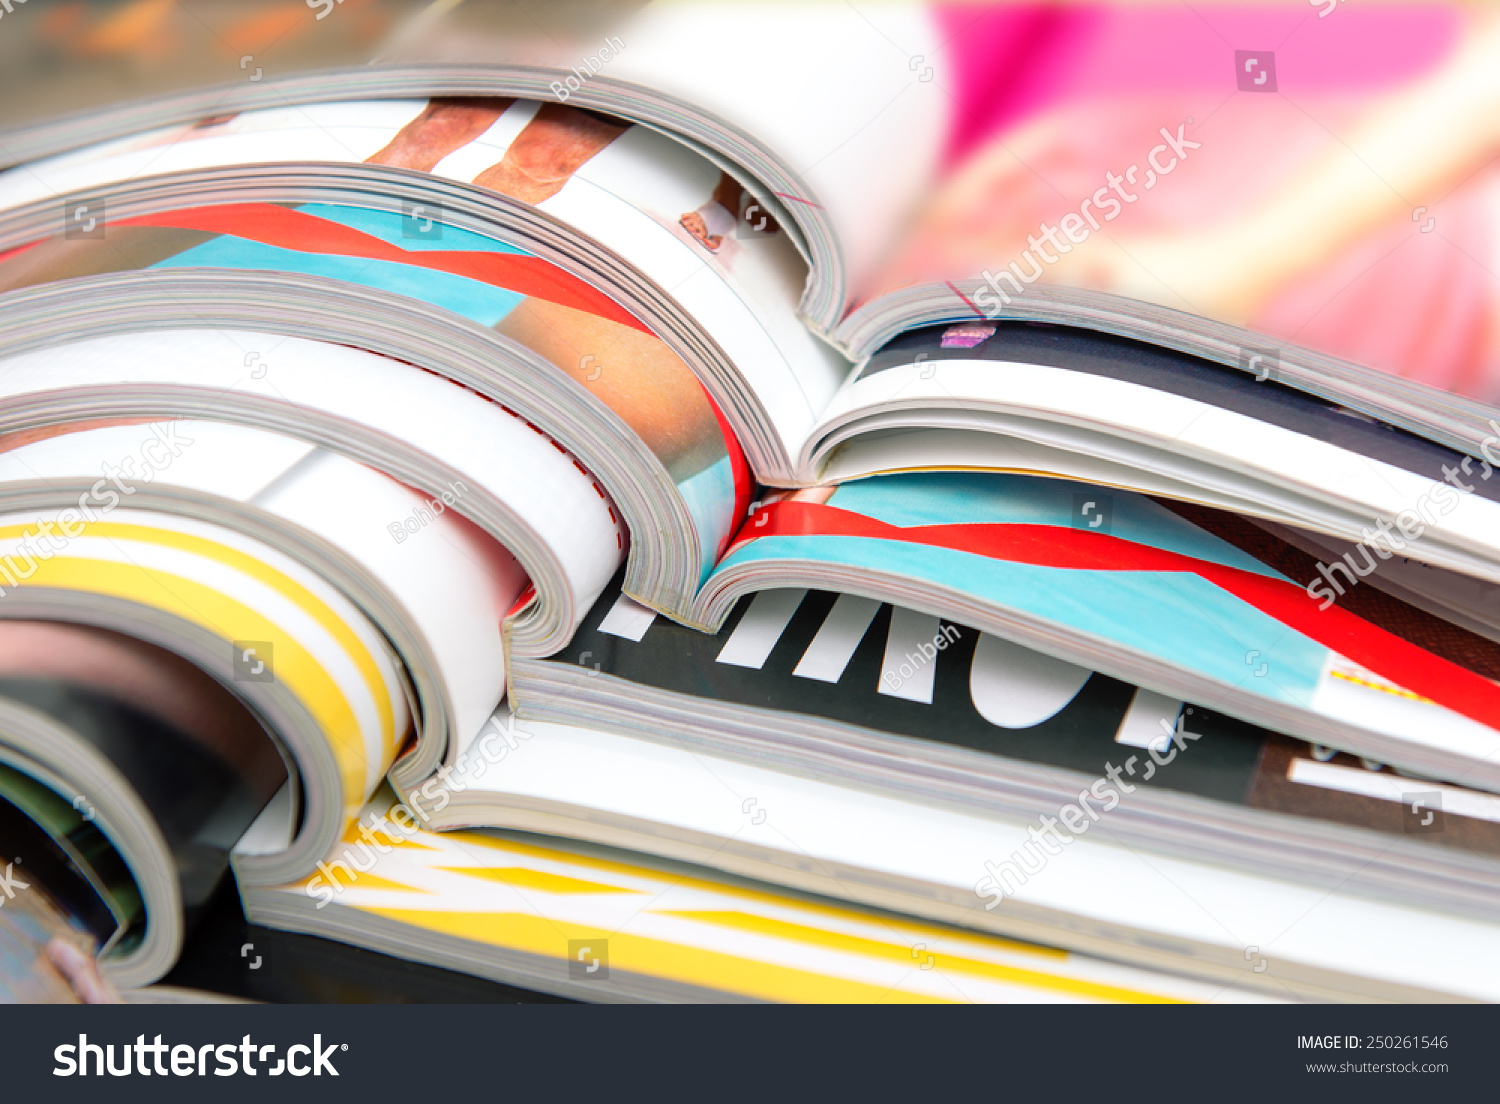 Stack of magazines #250261546